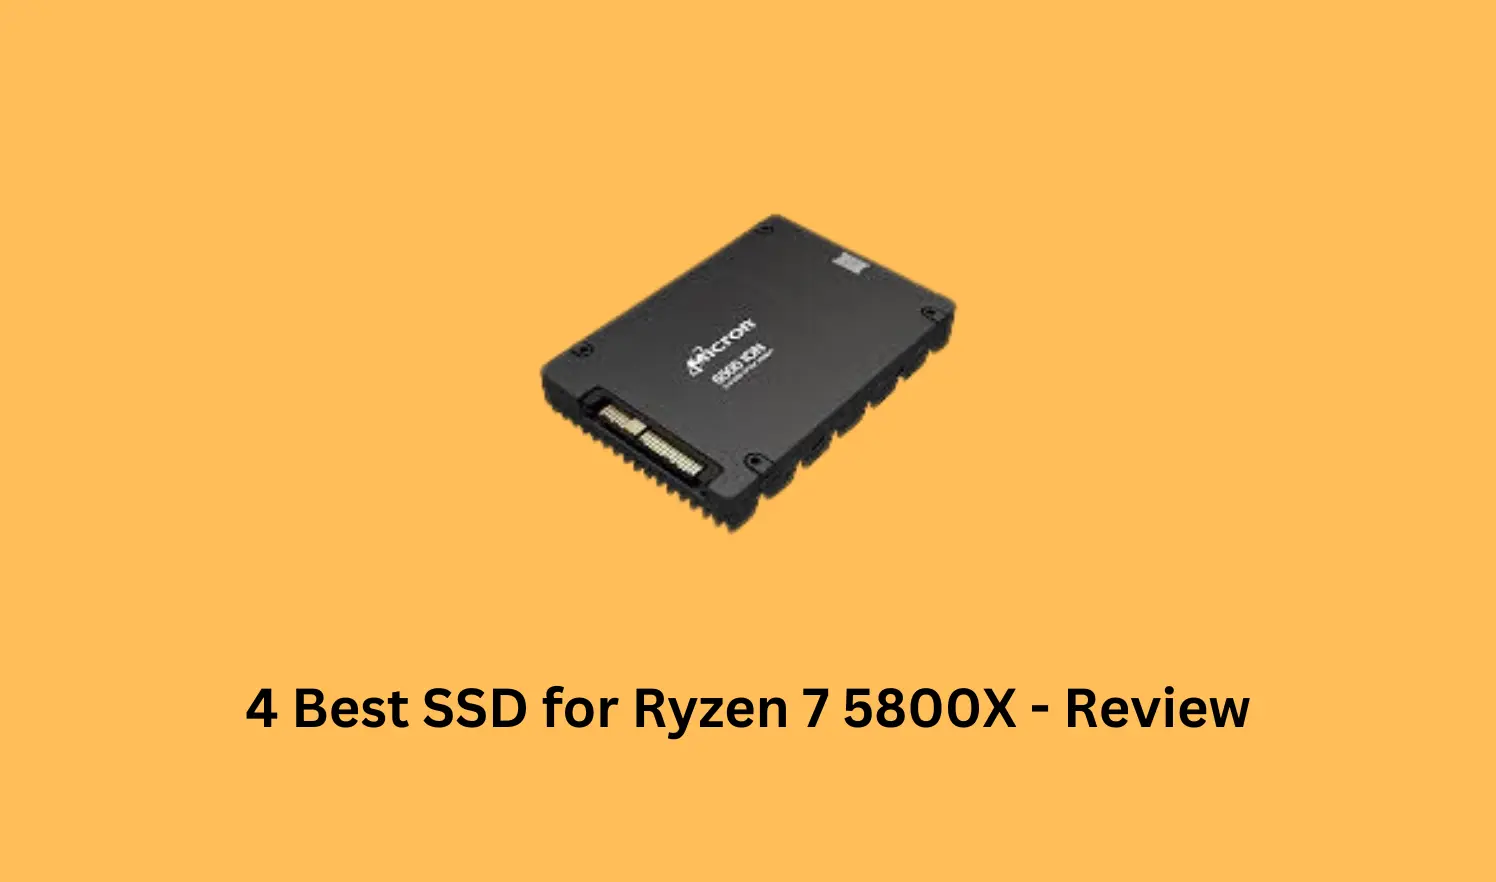 4 Best SSD for Ryzen 7 5800X - Review